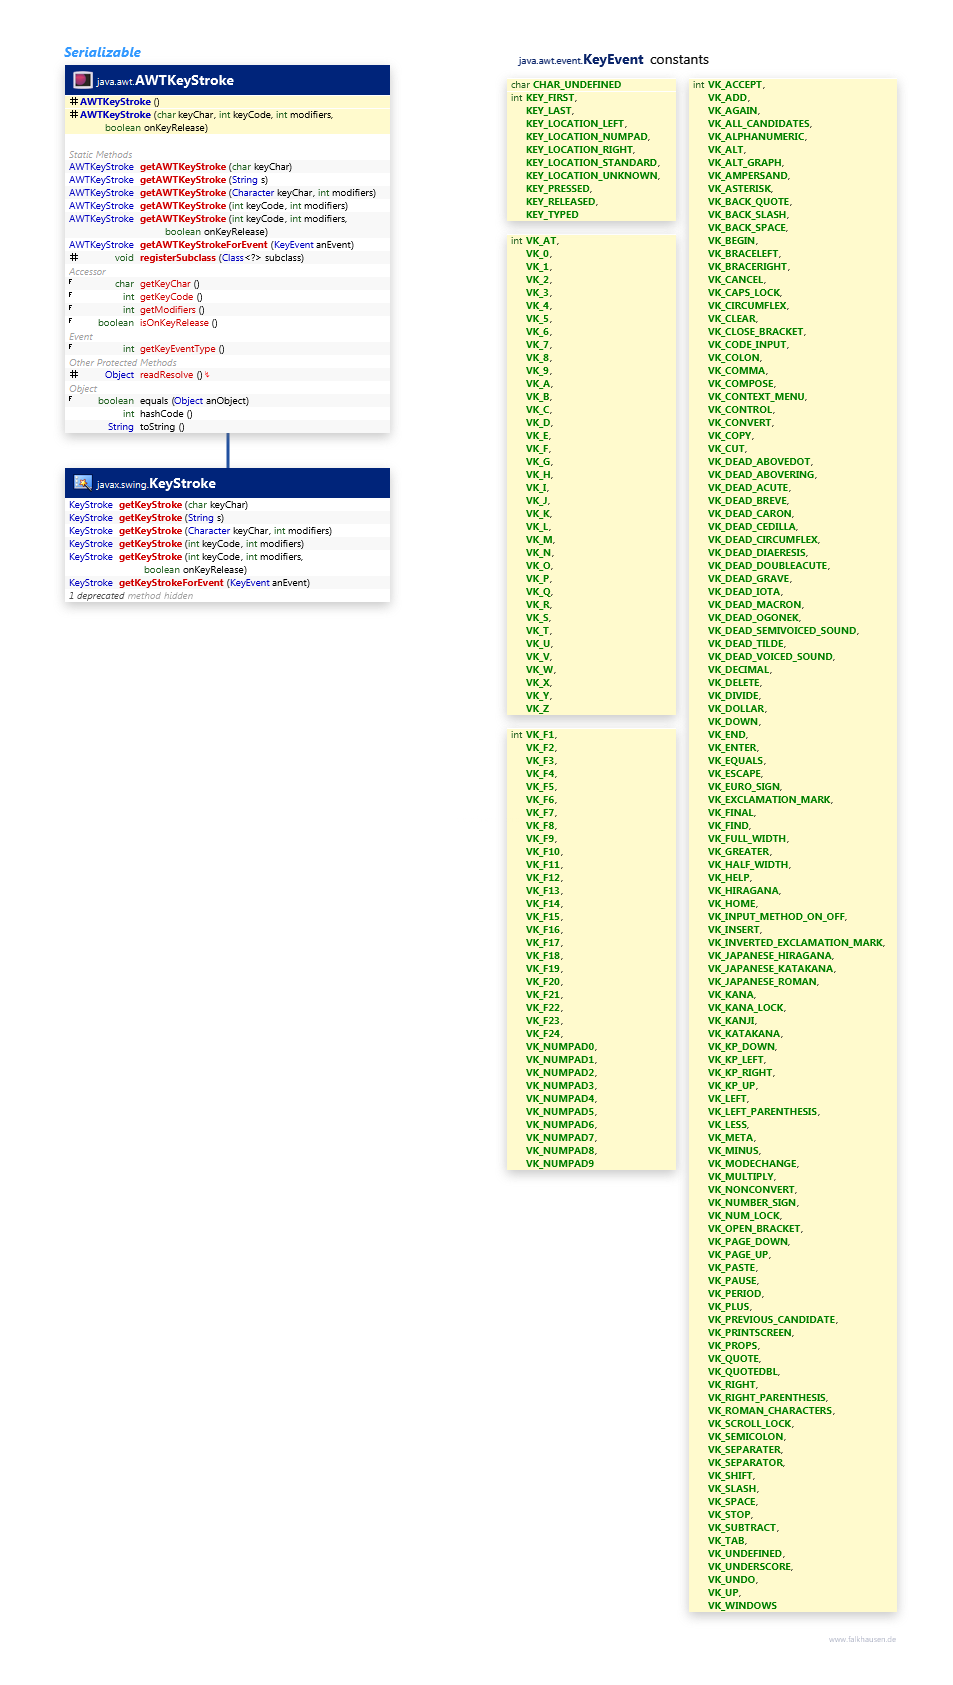 KeyStroke class diagram and api documentation for Java 8